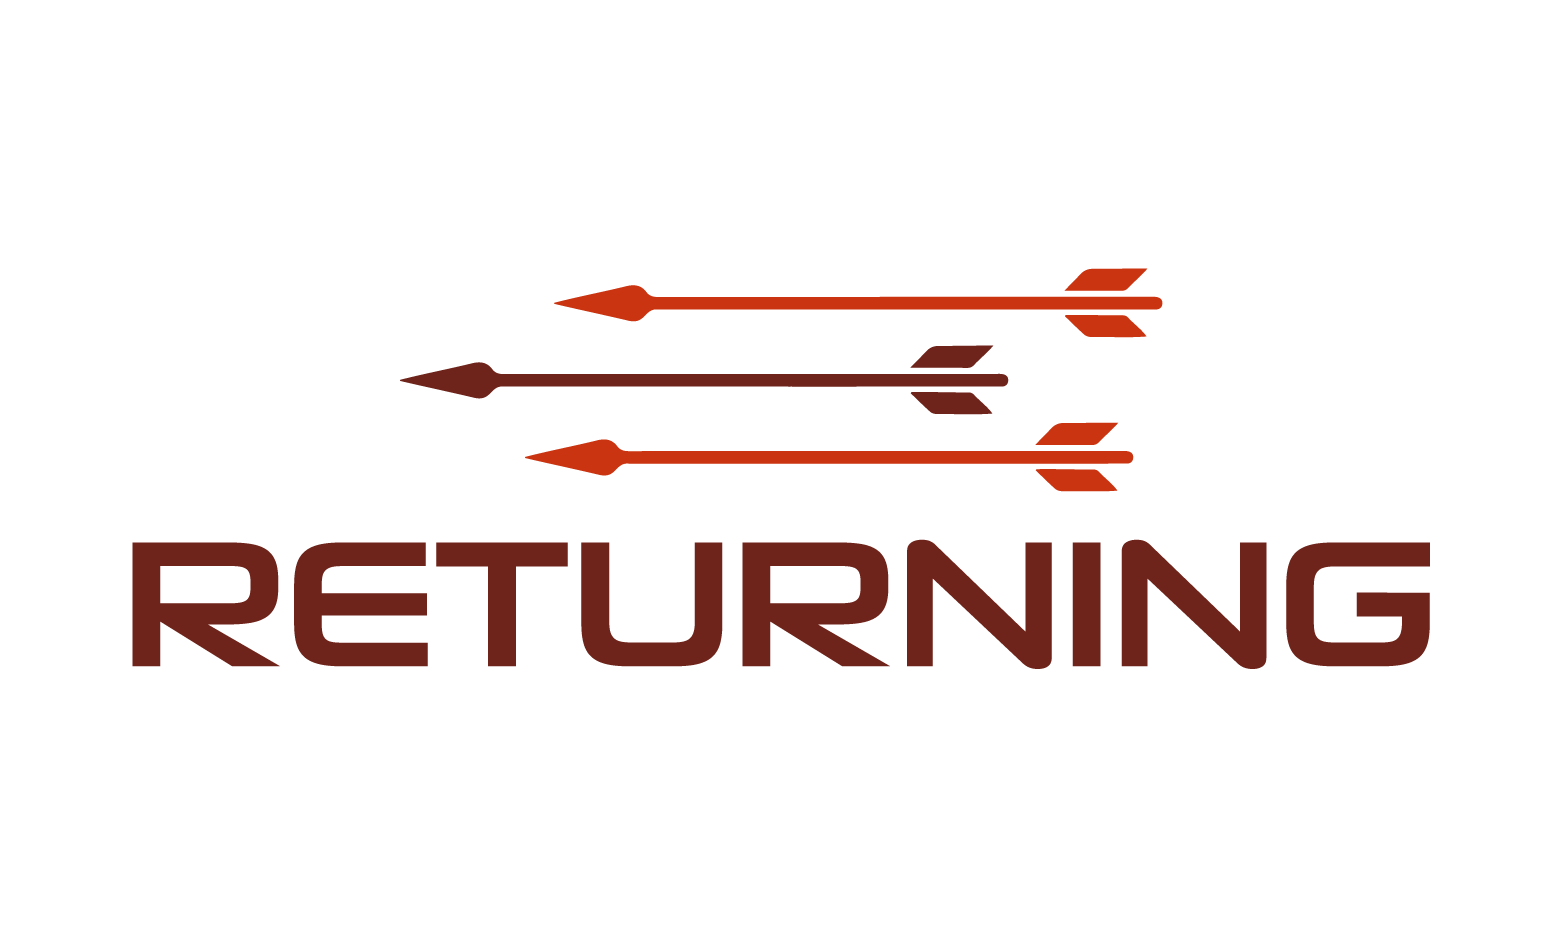 Returning.com - Creative brandable domain for sale